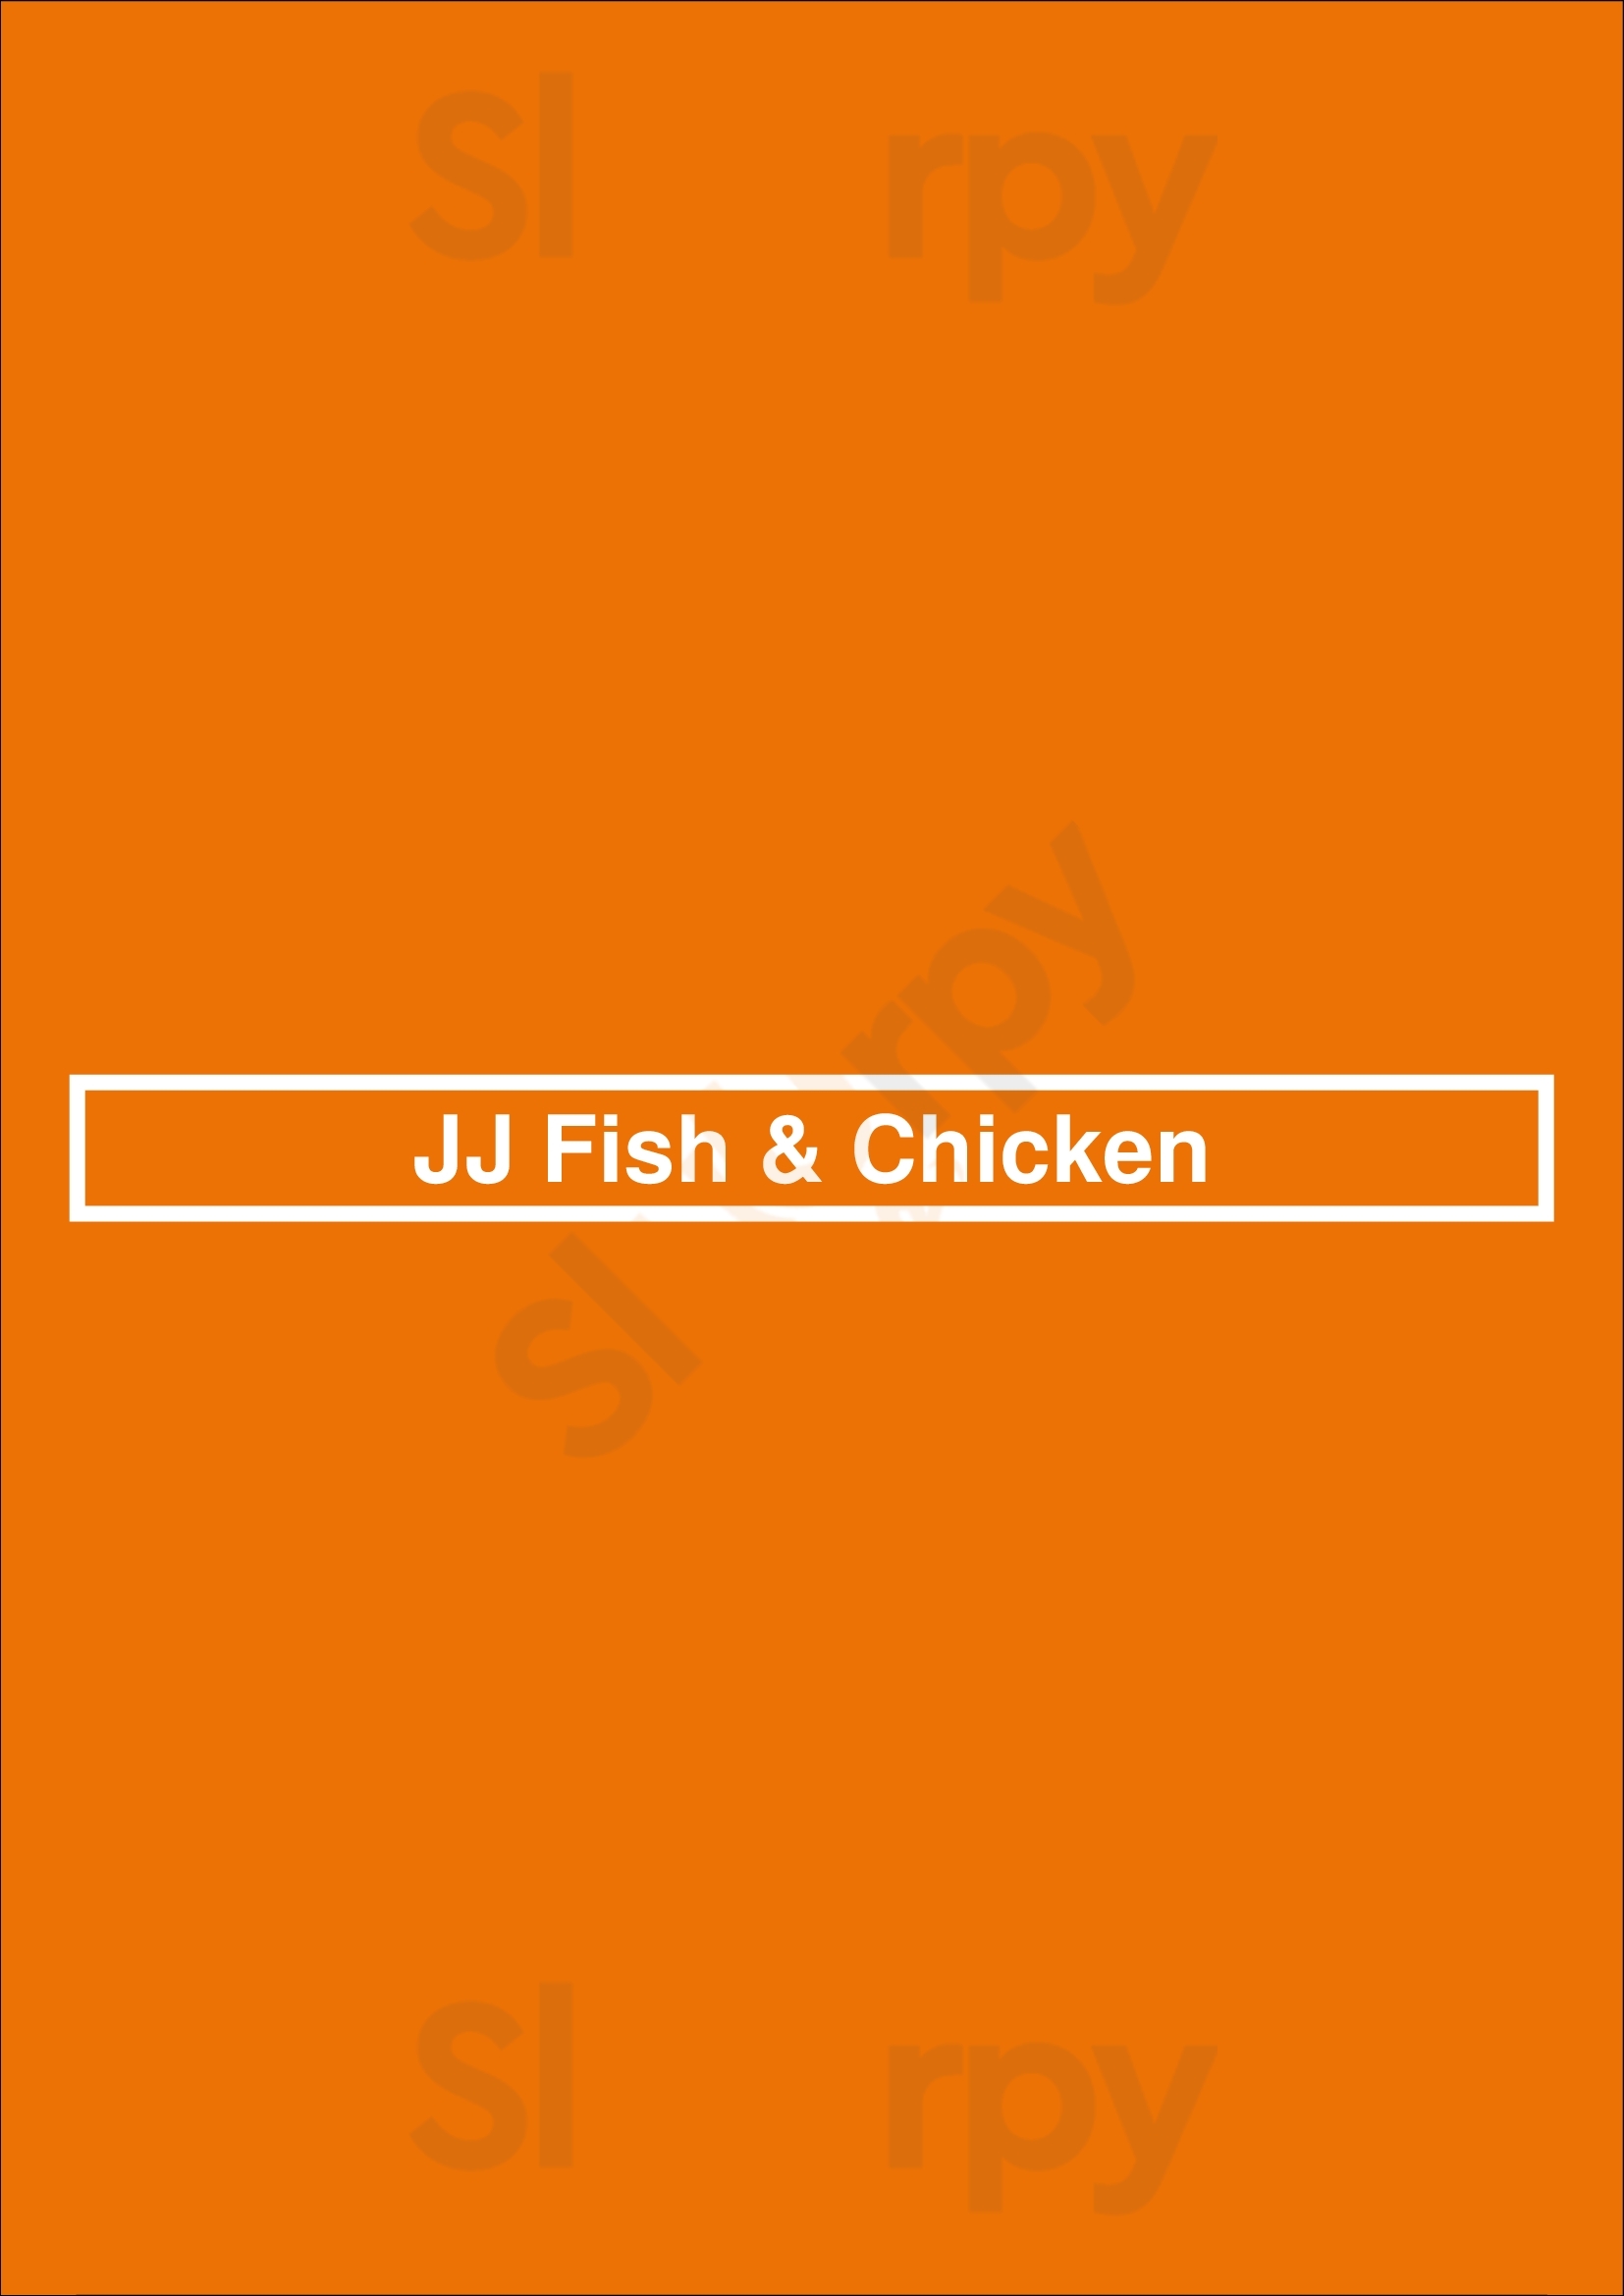 Jj Fish & Chicken Milwaukee Menu - 1